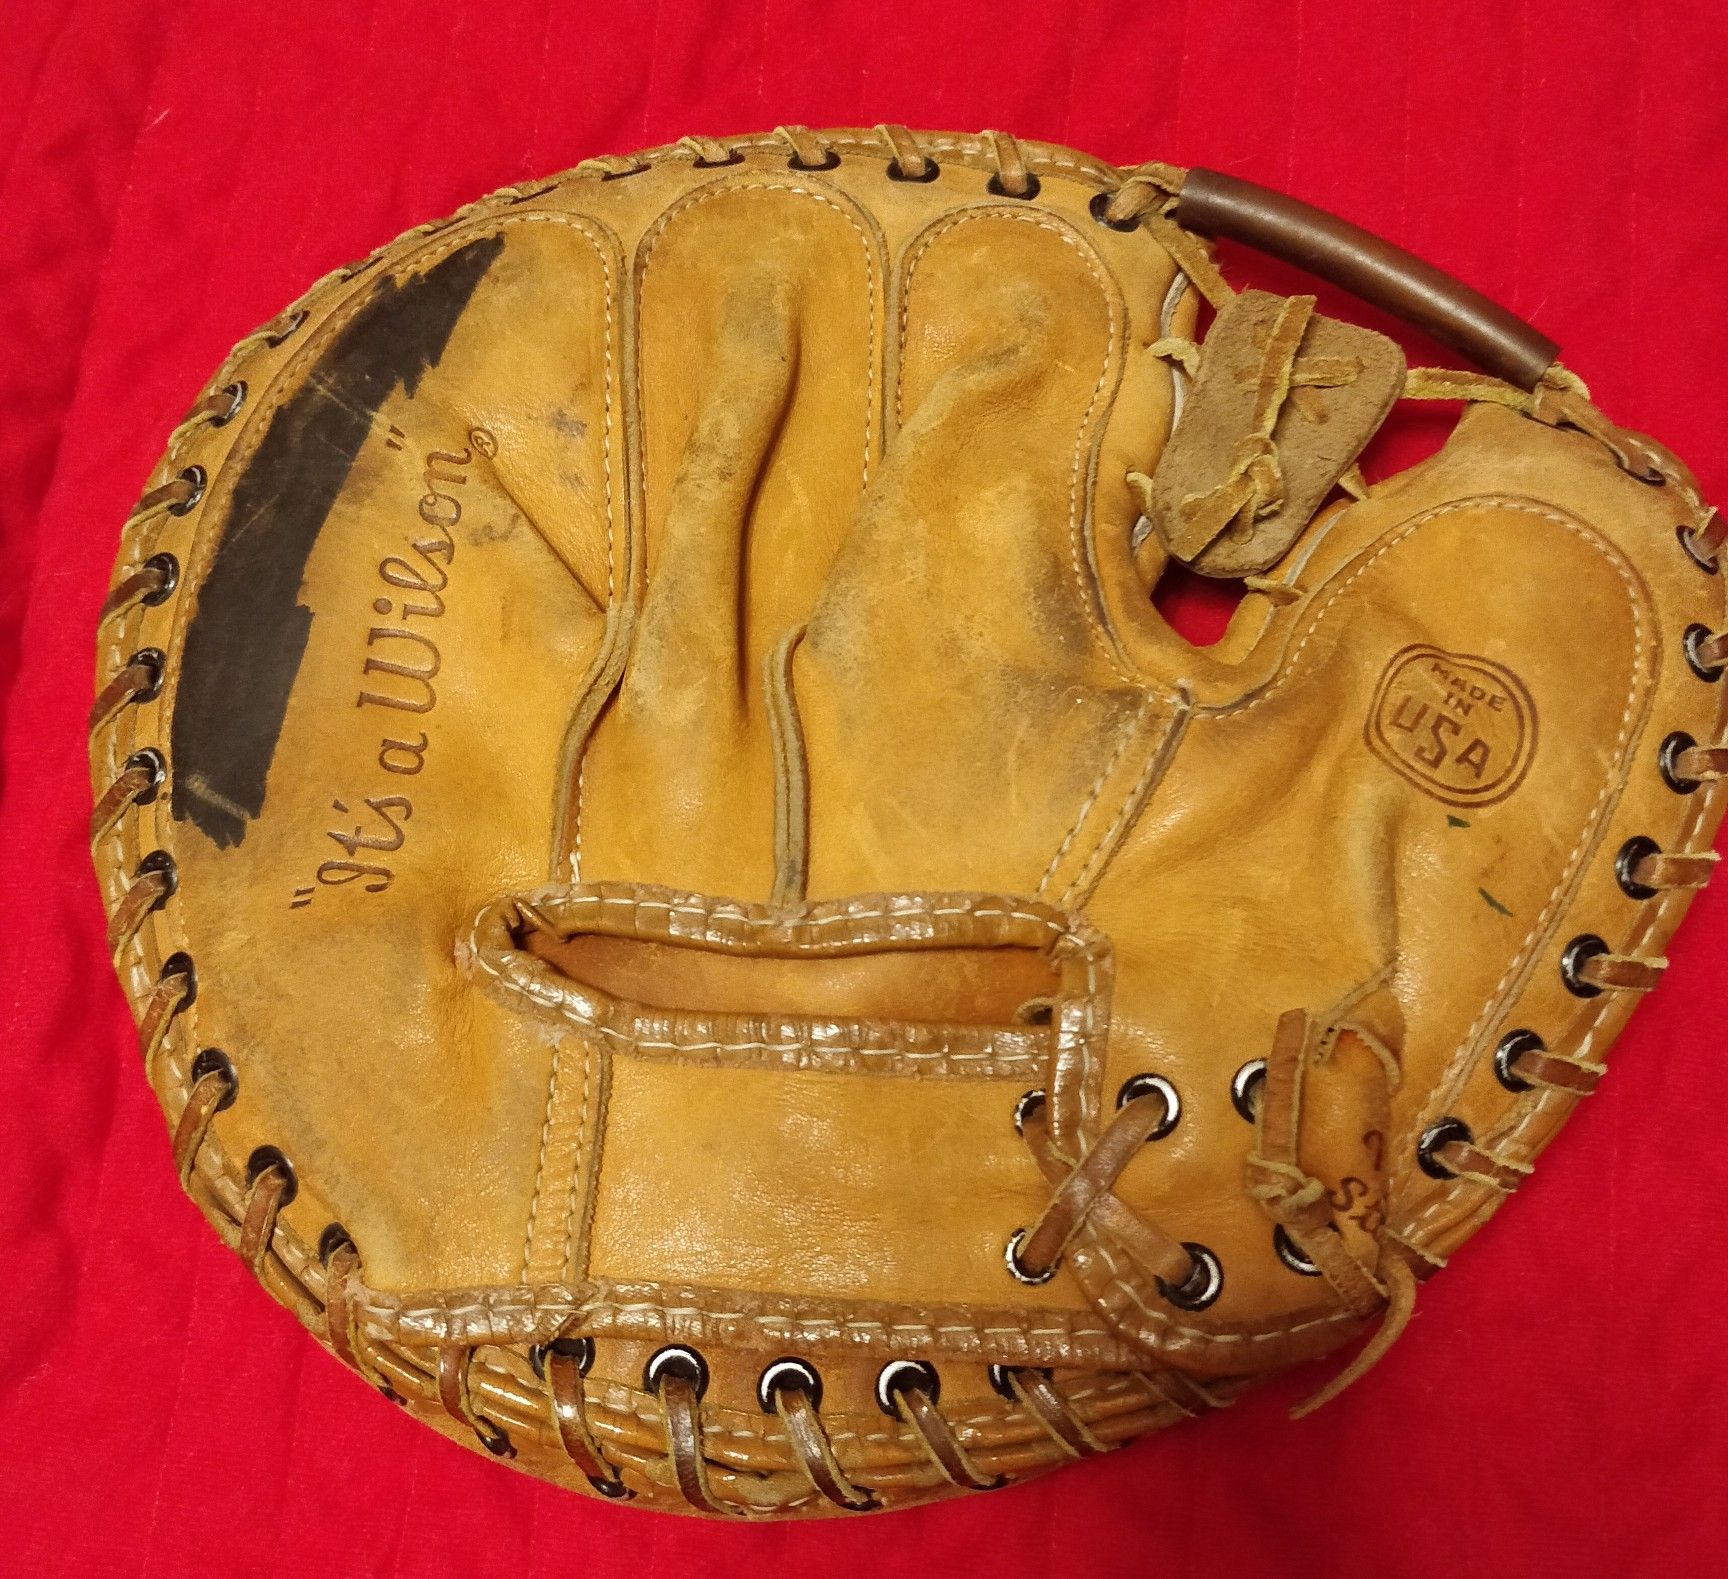 Wilson Softball Glove A9876